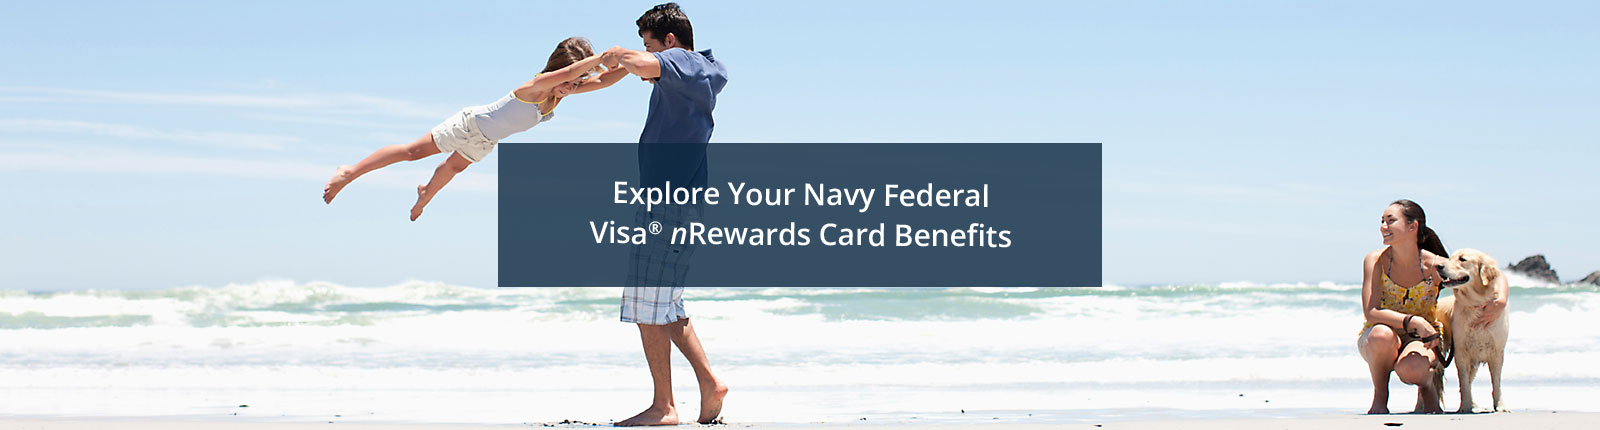 Explore Your Navy Federal Visa® nRewards Card Benefits